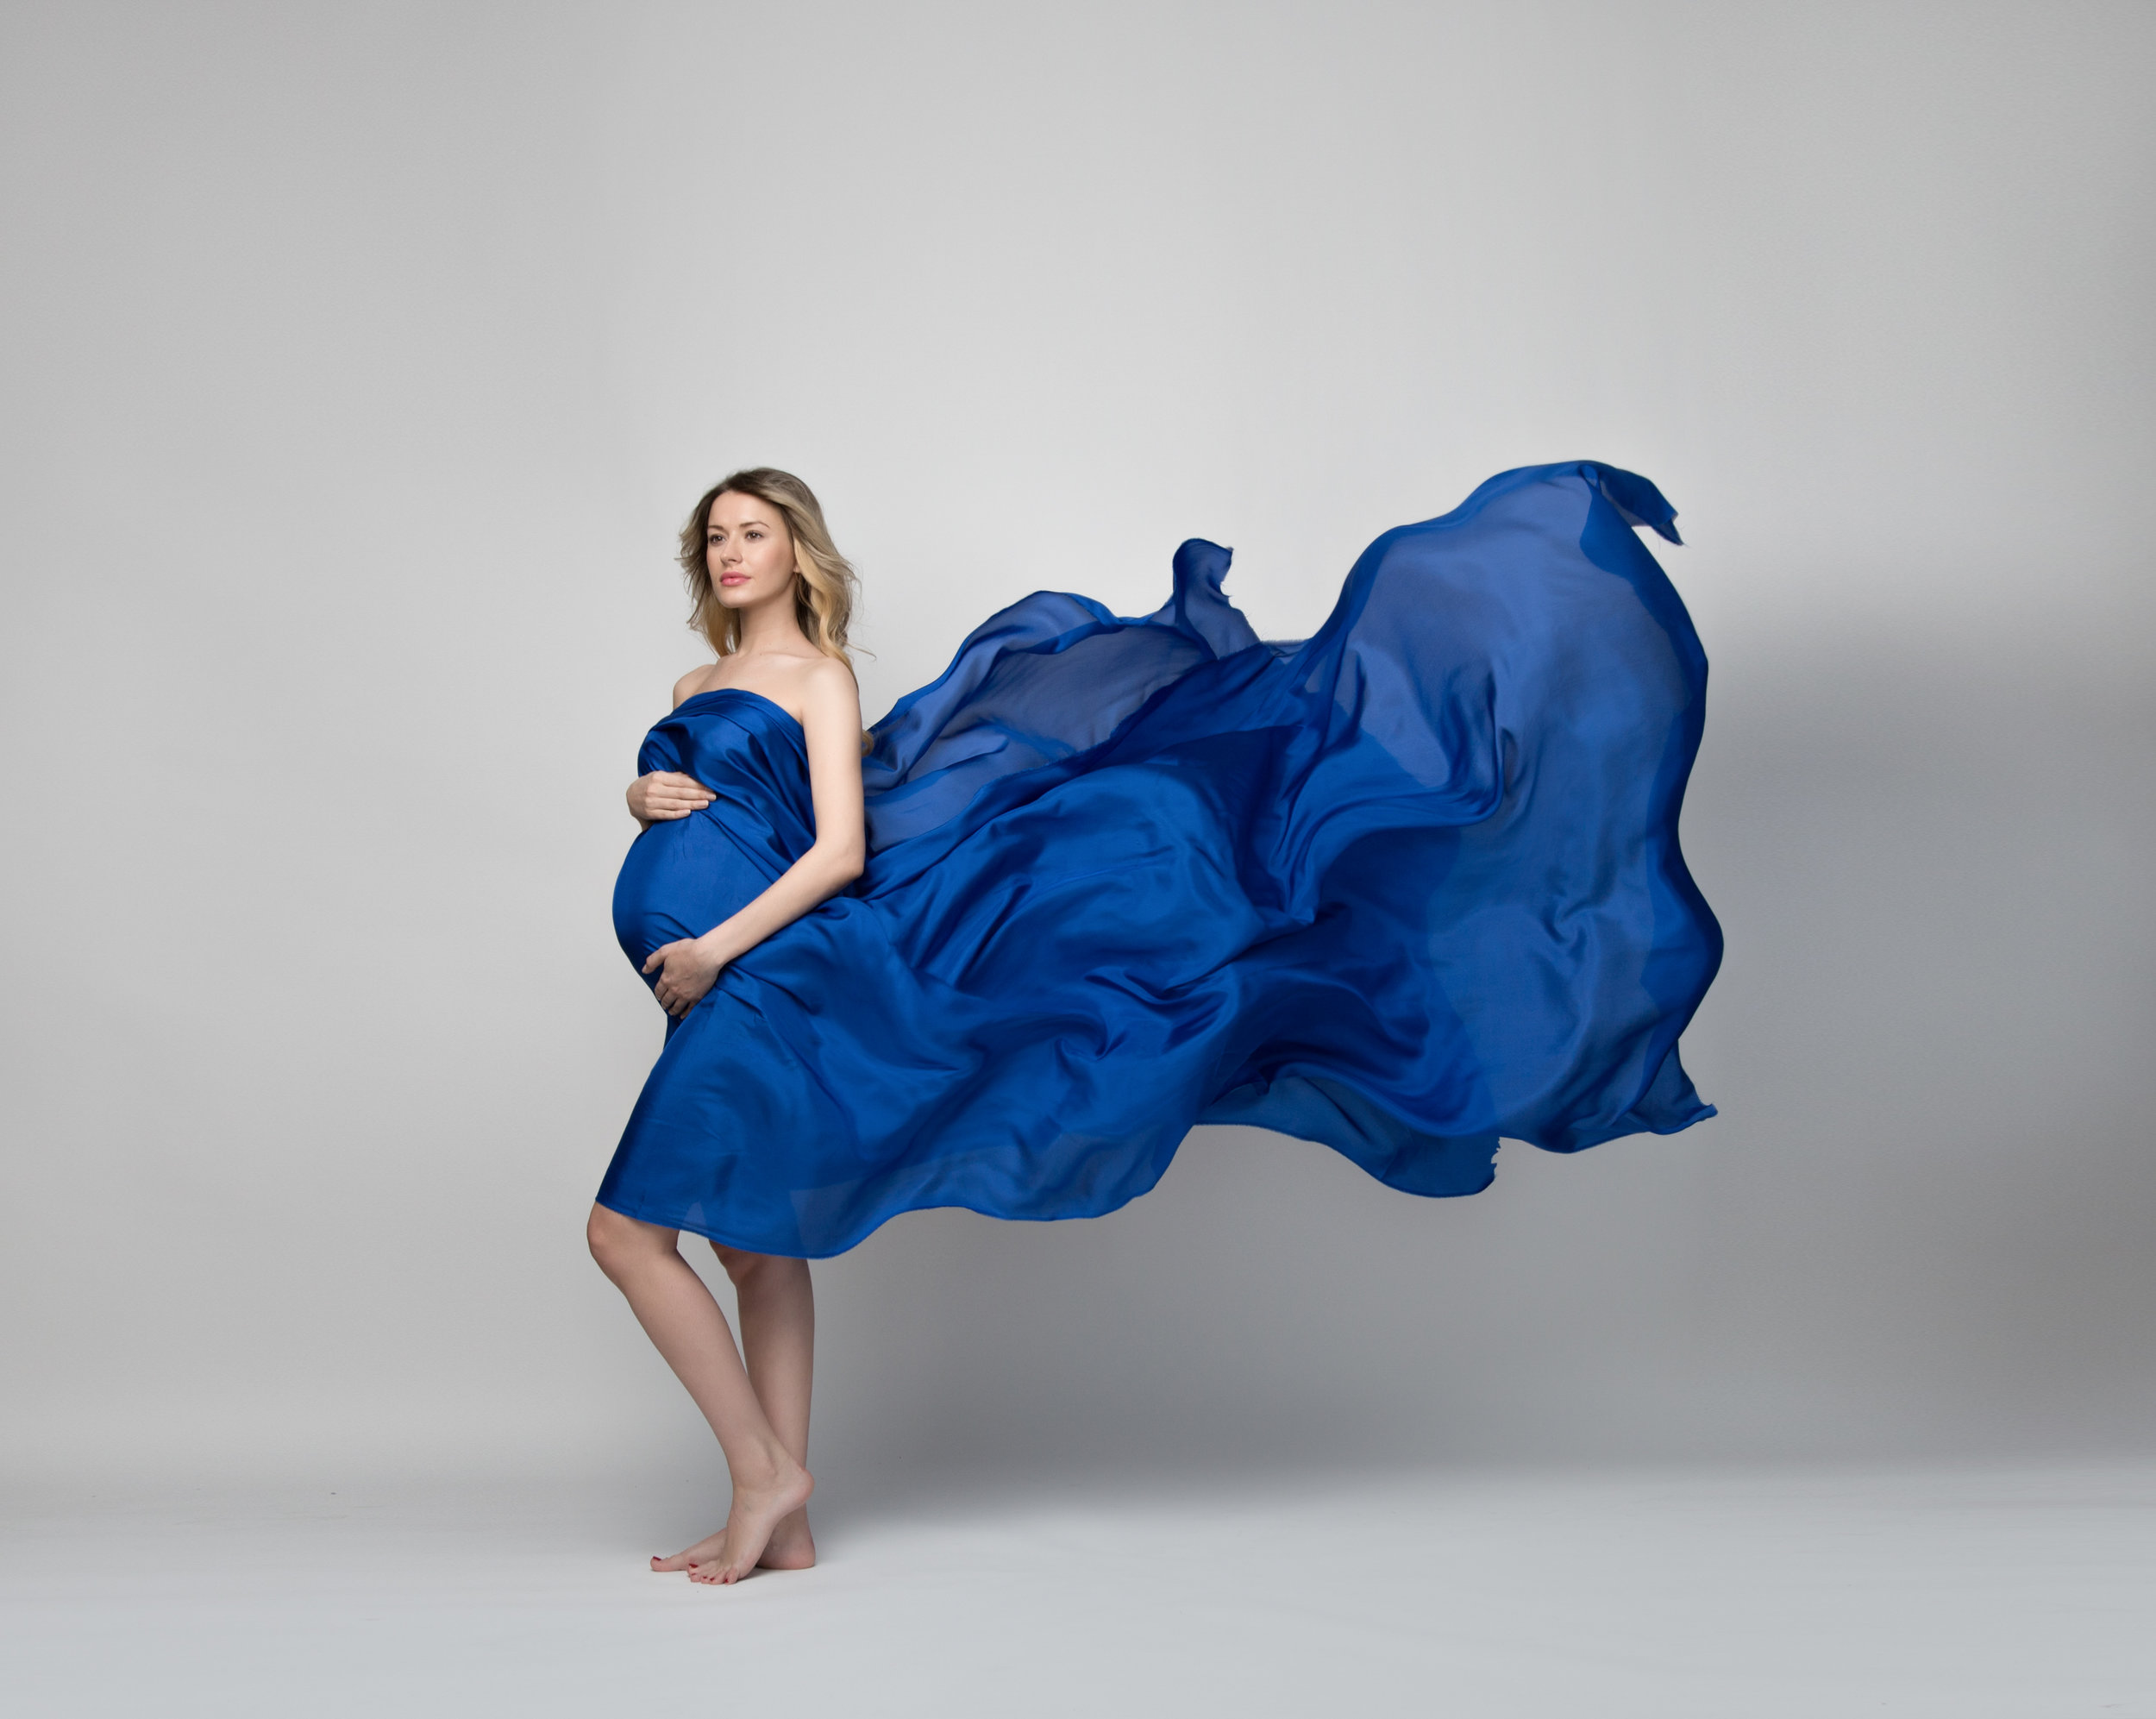 Stunning portraits of pregnancy